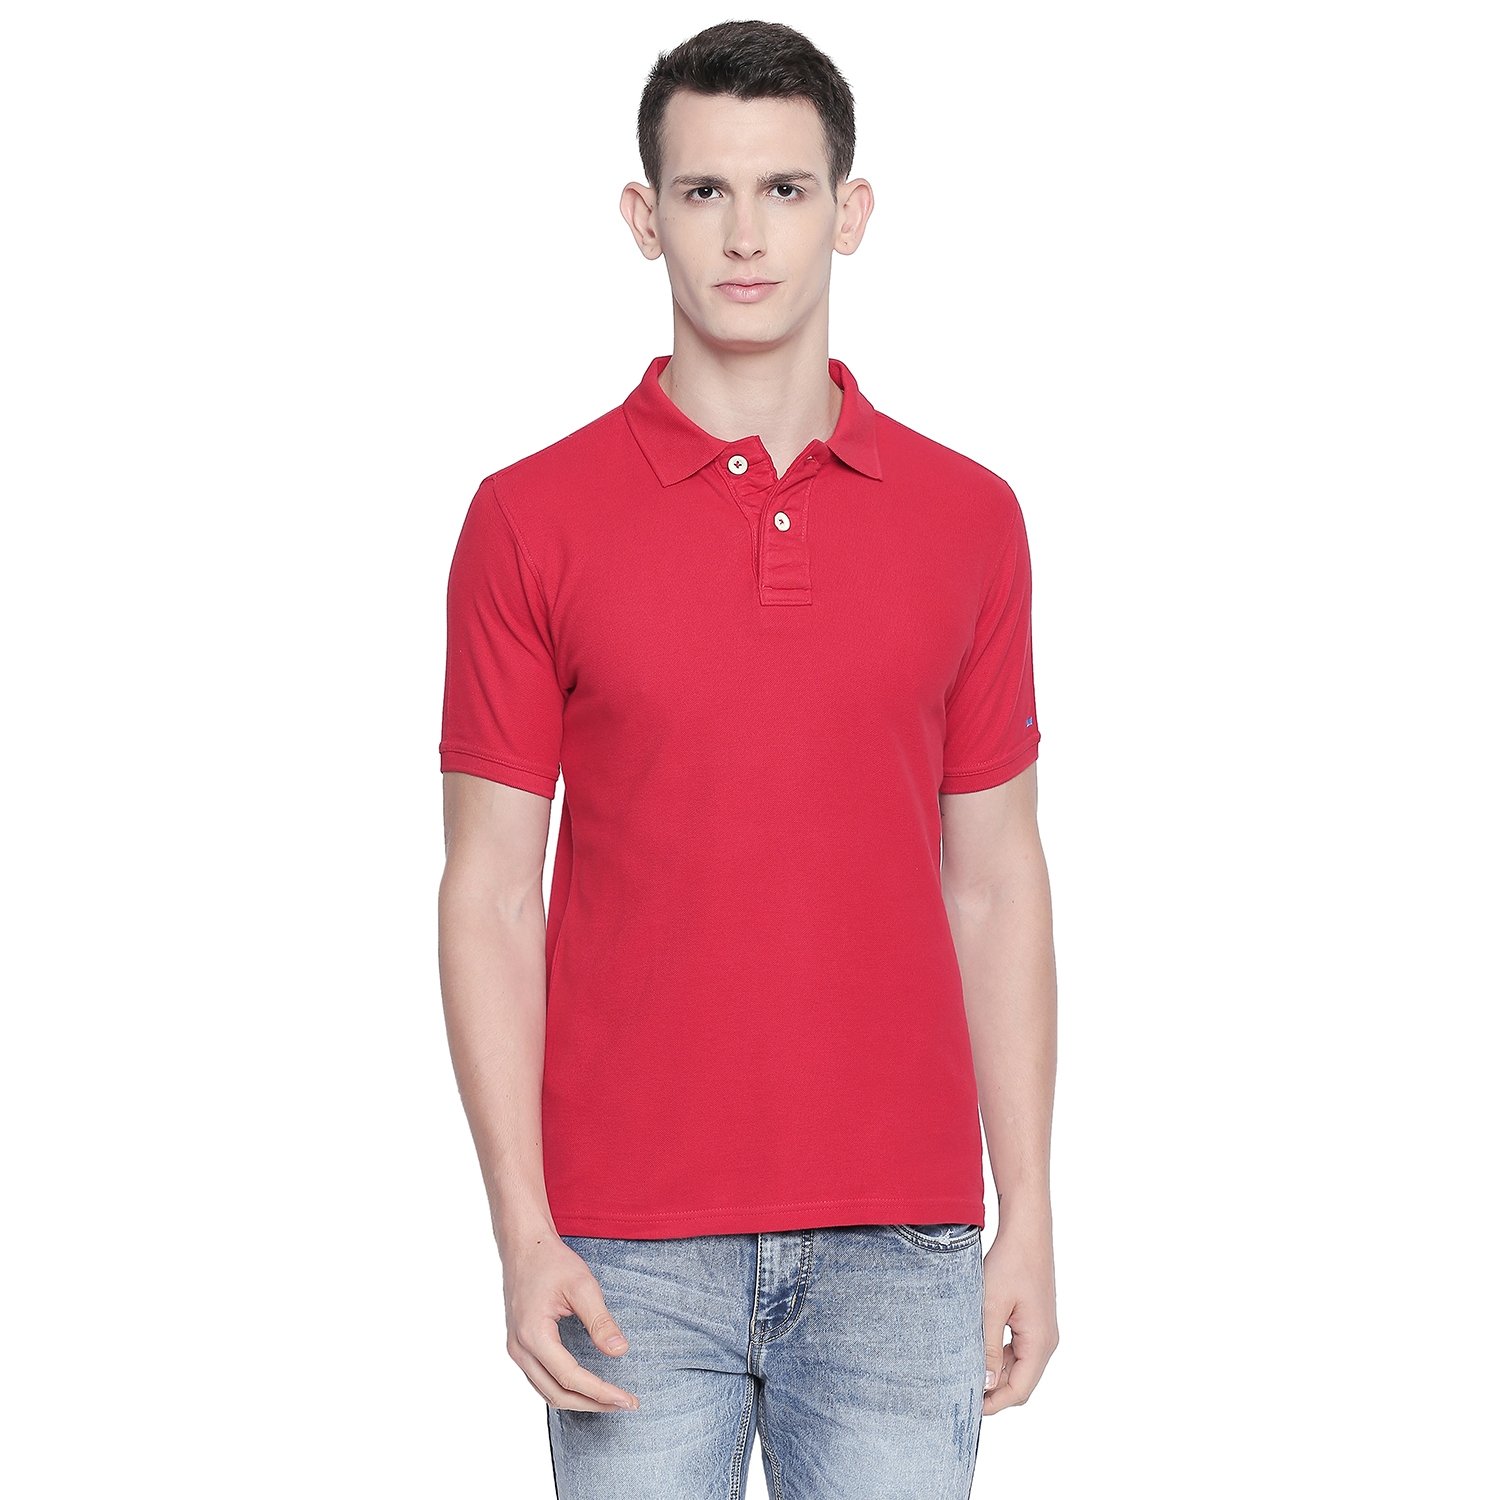 Basics | Basics Muscle Fit Red Piqu Polo T-Shirt